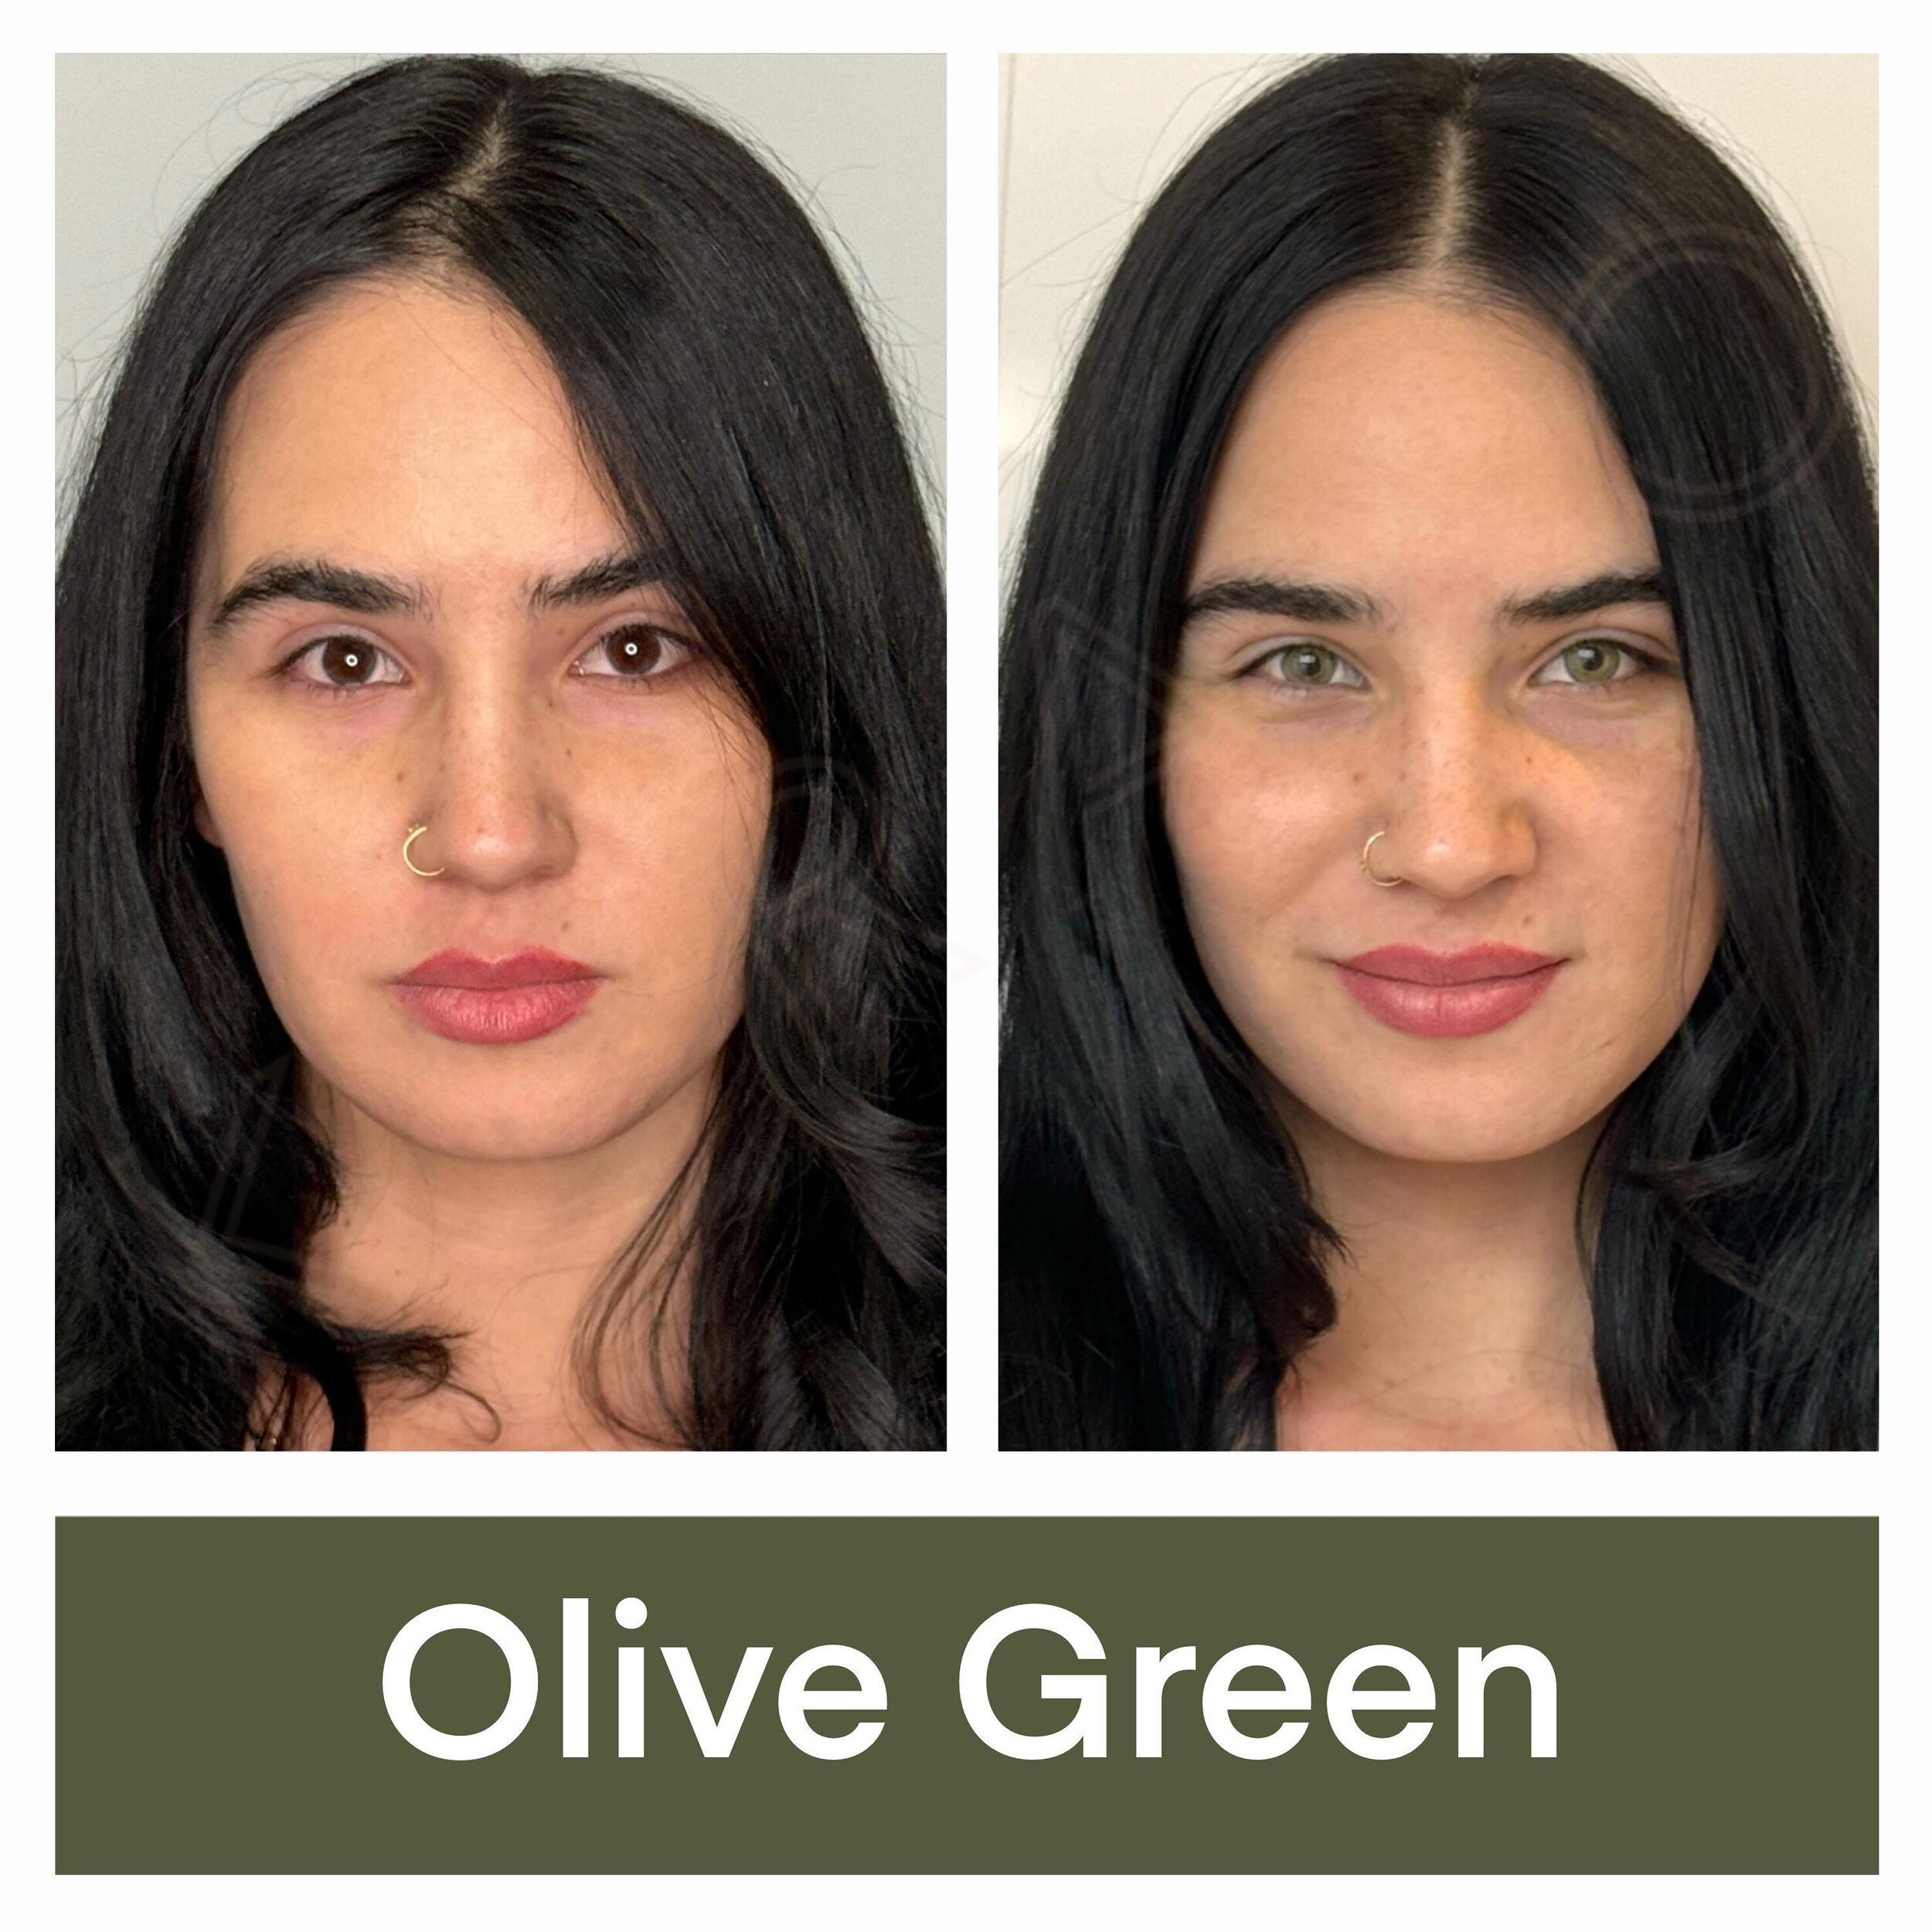 🫒OLIVE🫒 #olive #green #greeneyes #kerato_nyc_safe_eye_color_change  #doctormovshovich #kerato #ophthalmology #medicine  #eyedoctor #eye  #eyecolorchange  #keratopigmentation #safeeyecolorchange  #beauty #permanenteyecolorchange #cosmeticsurgery #pl